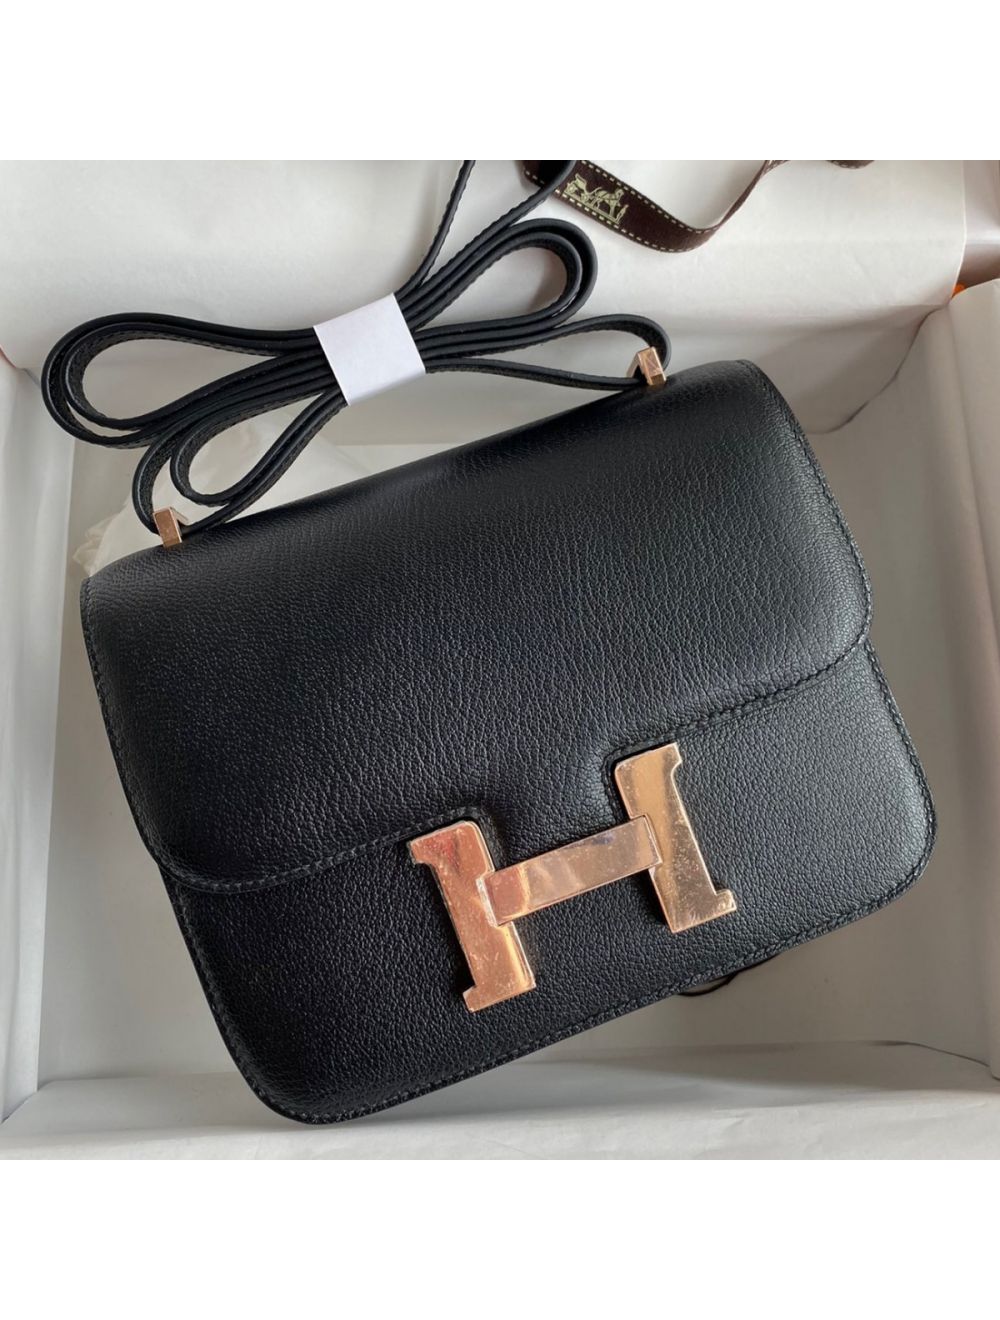 Replica Hermes Constance 18 Handmade Bag In Black Chevre Mysore Leather